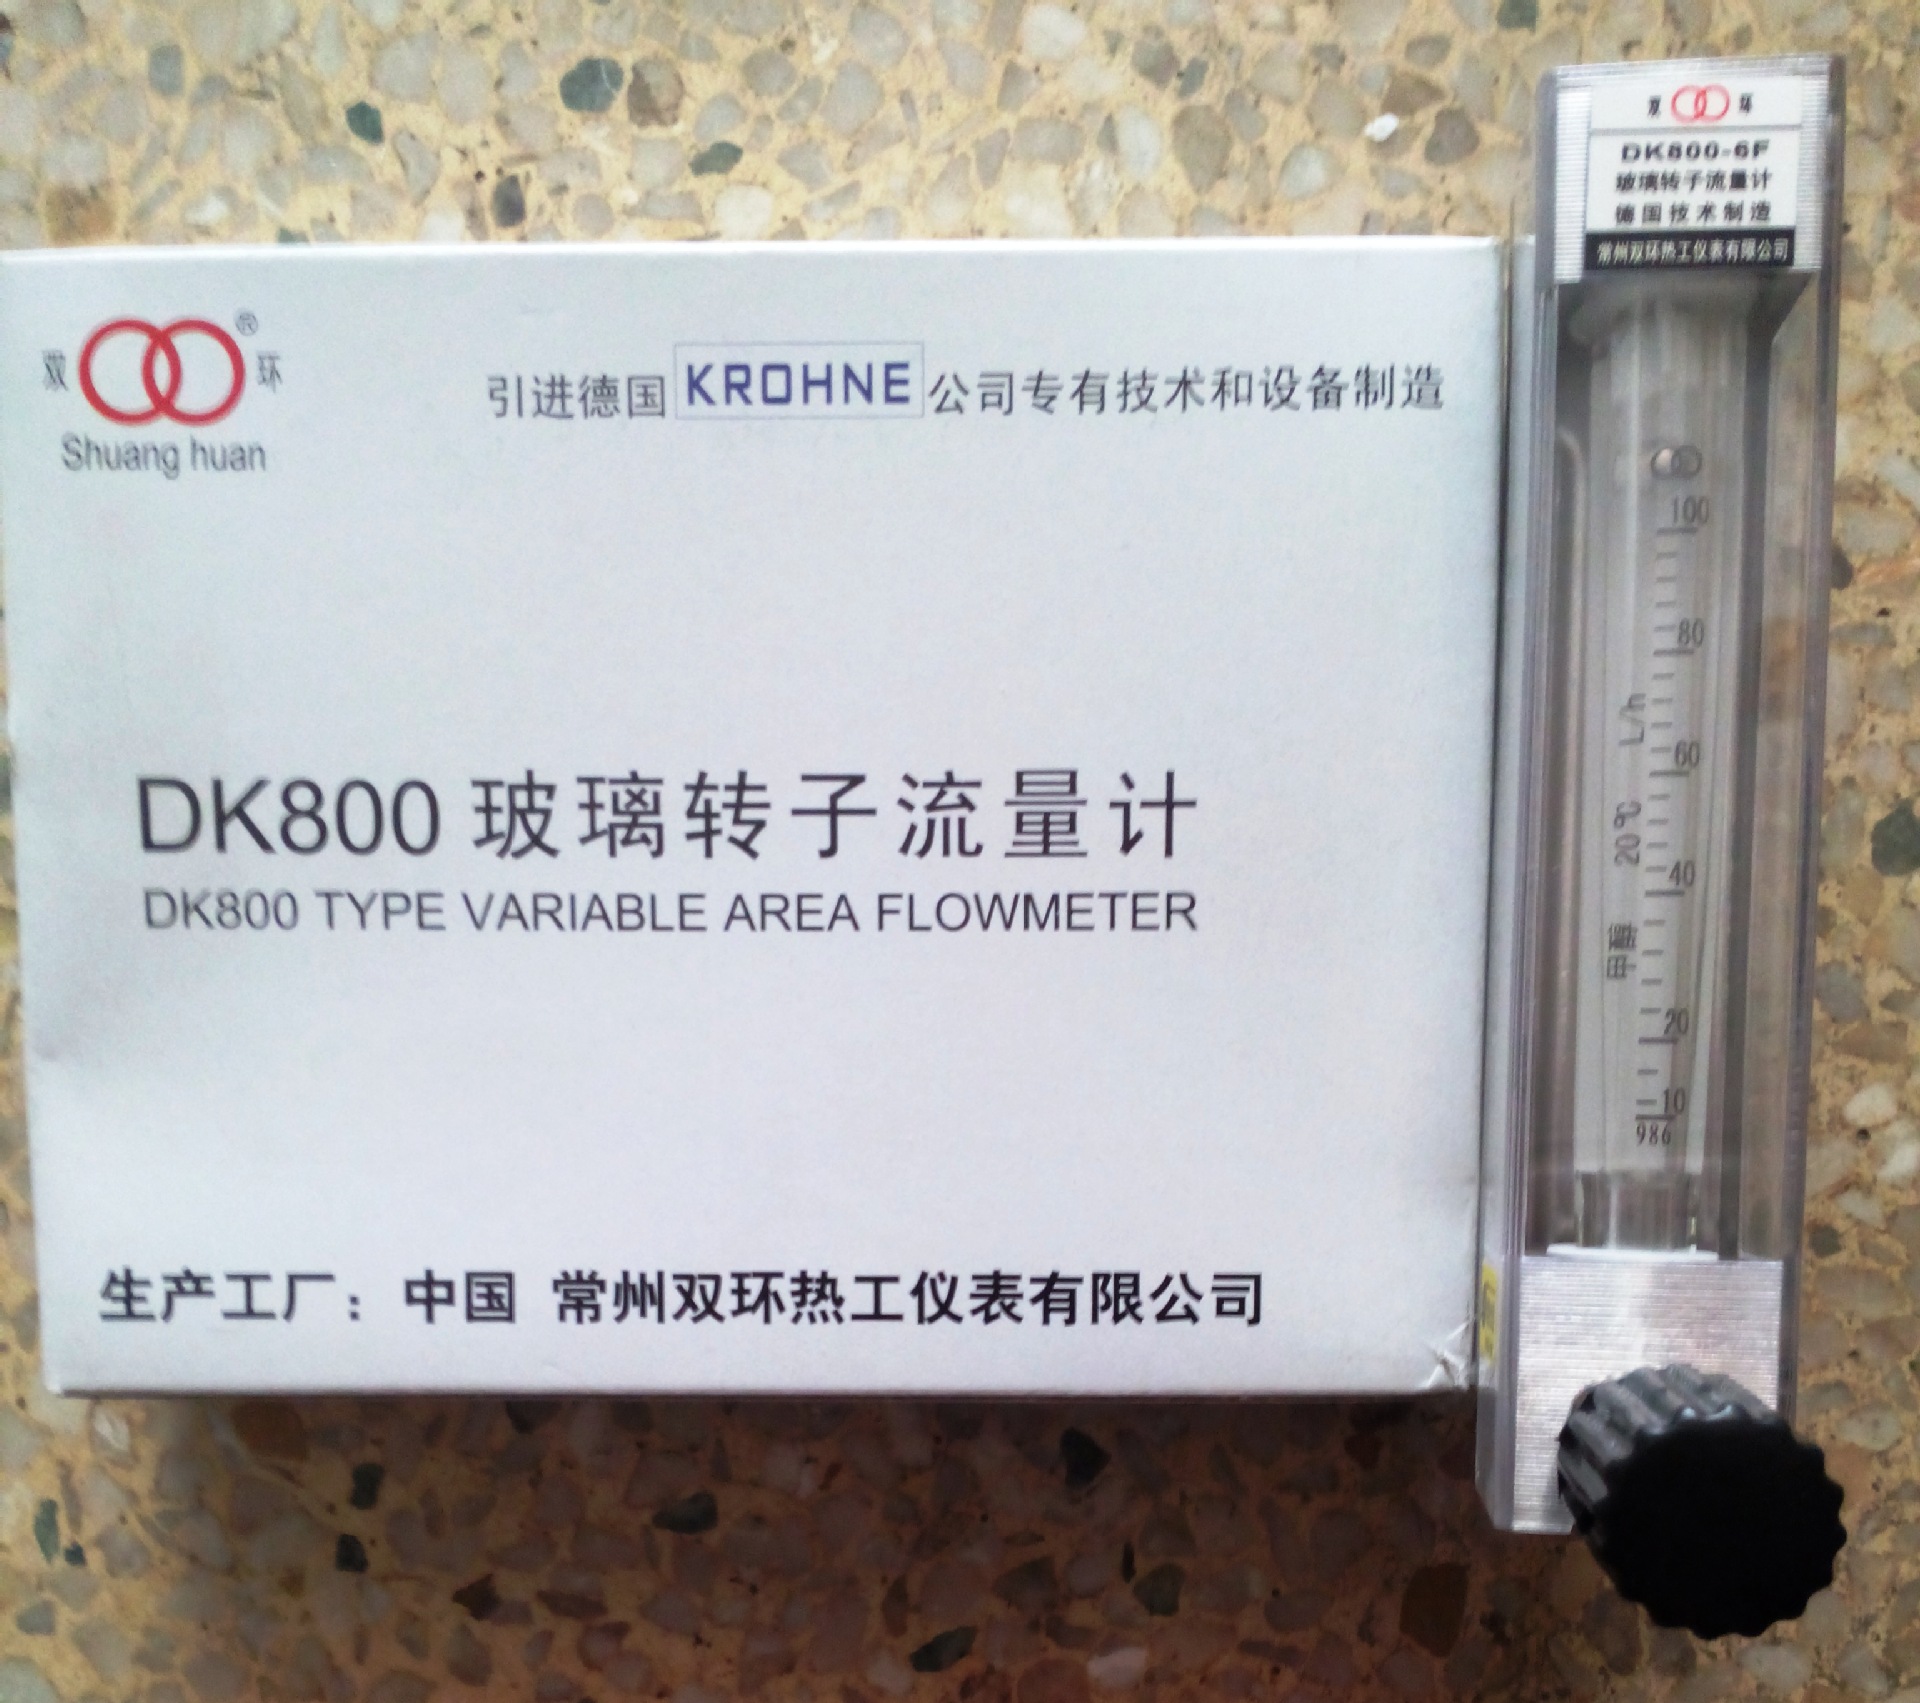 DK800-2F玻璃转子流量计,玻璃管浮子流量计,带调节阀流量计